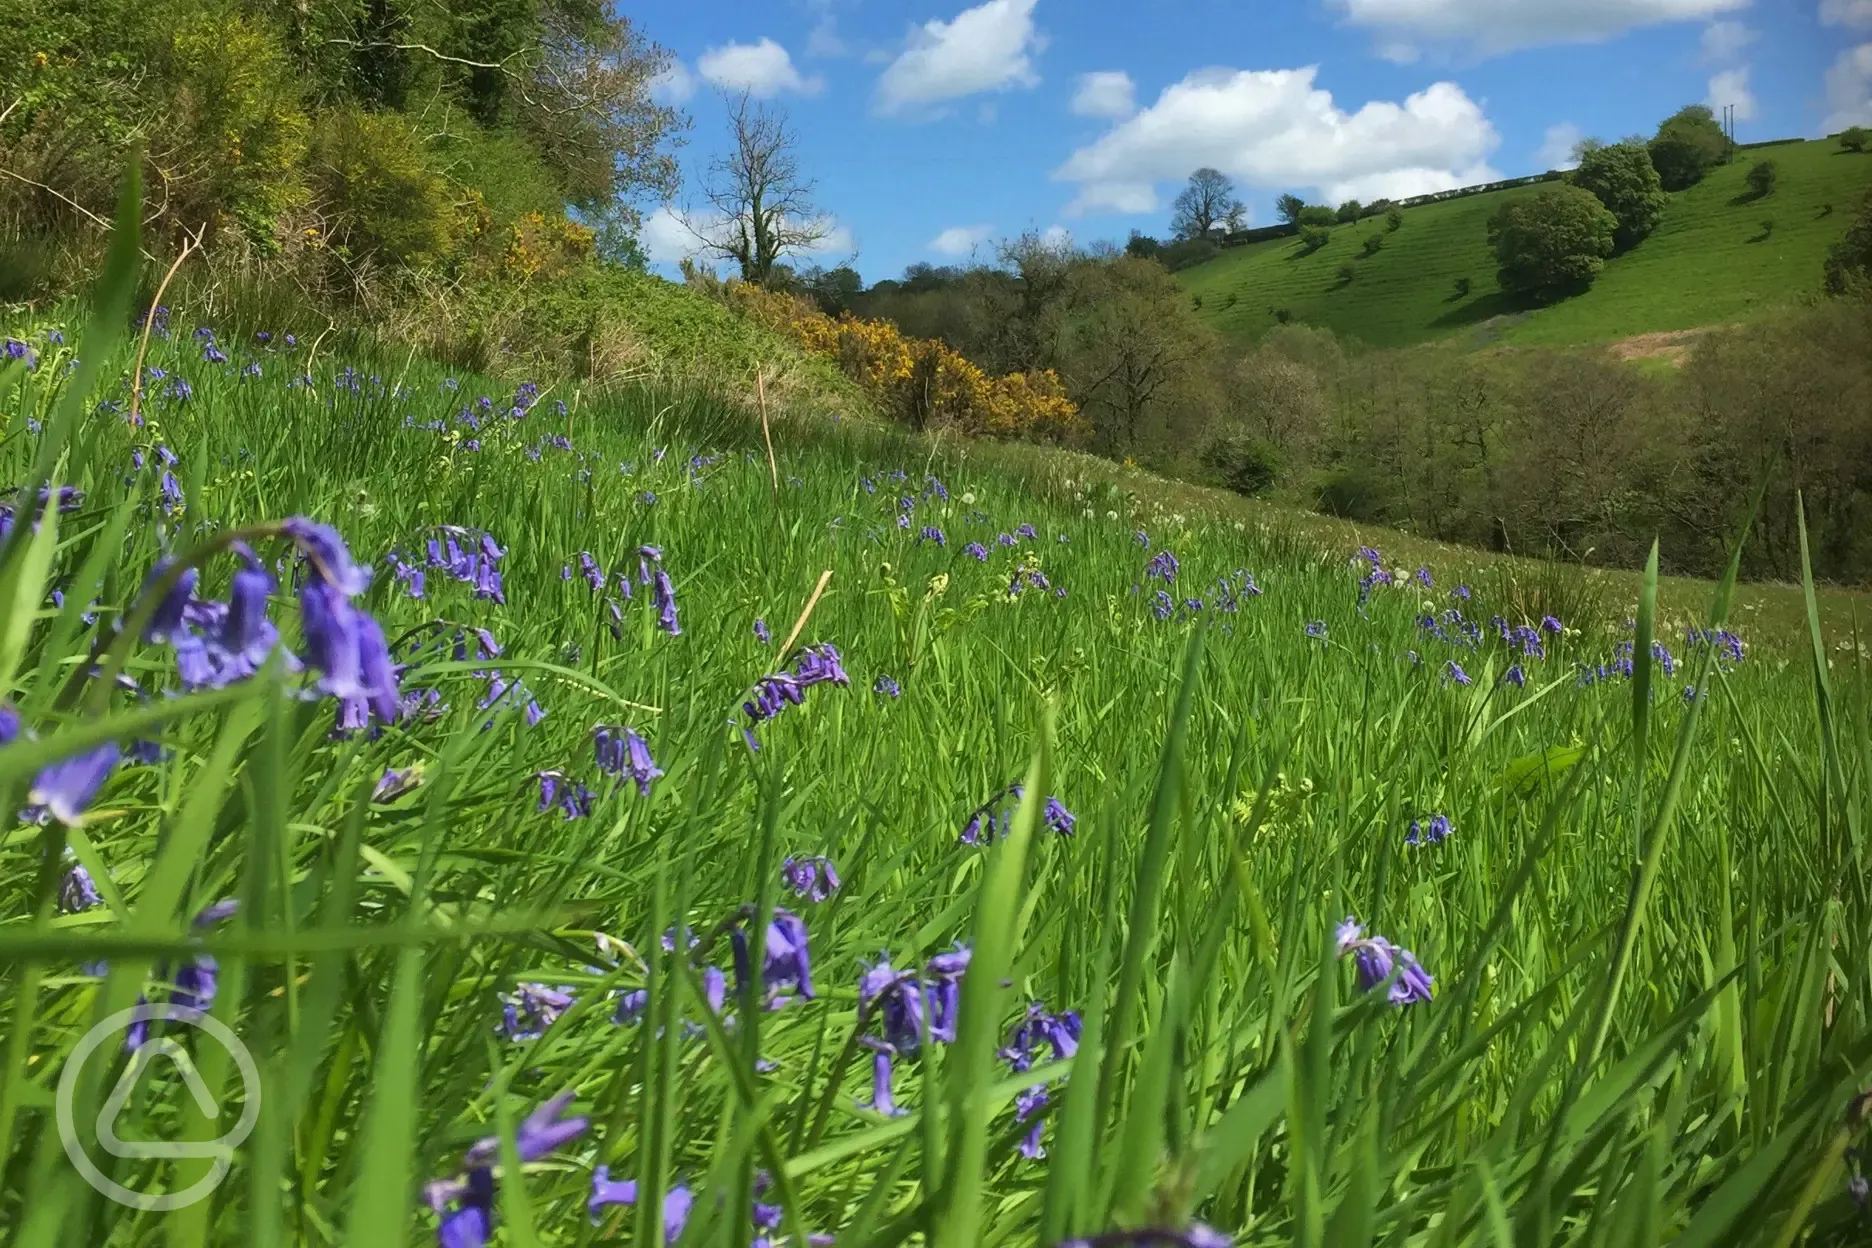 Beautiful walks around the farm, bluebells in May